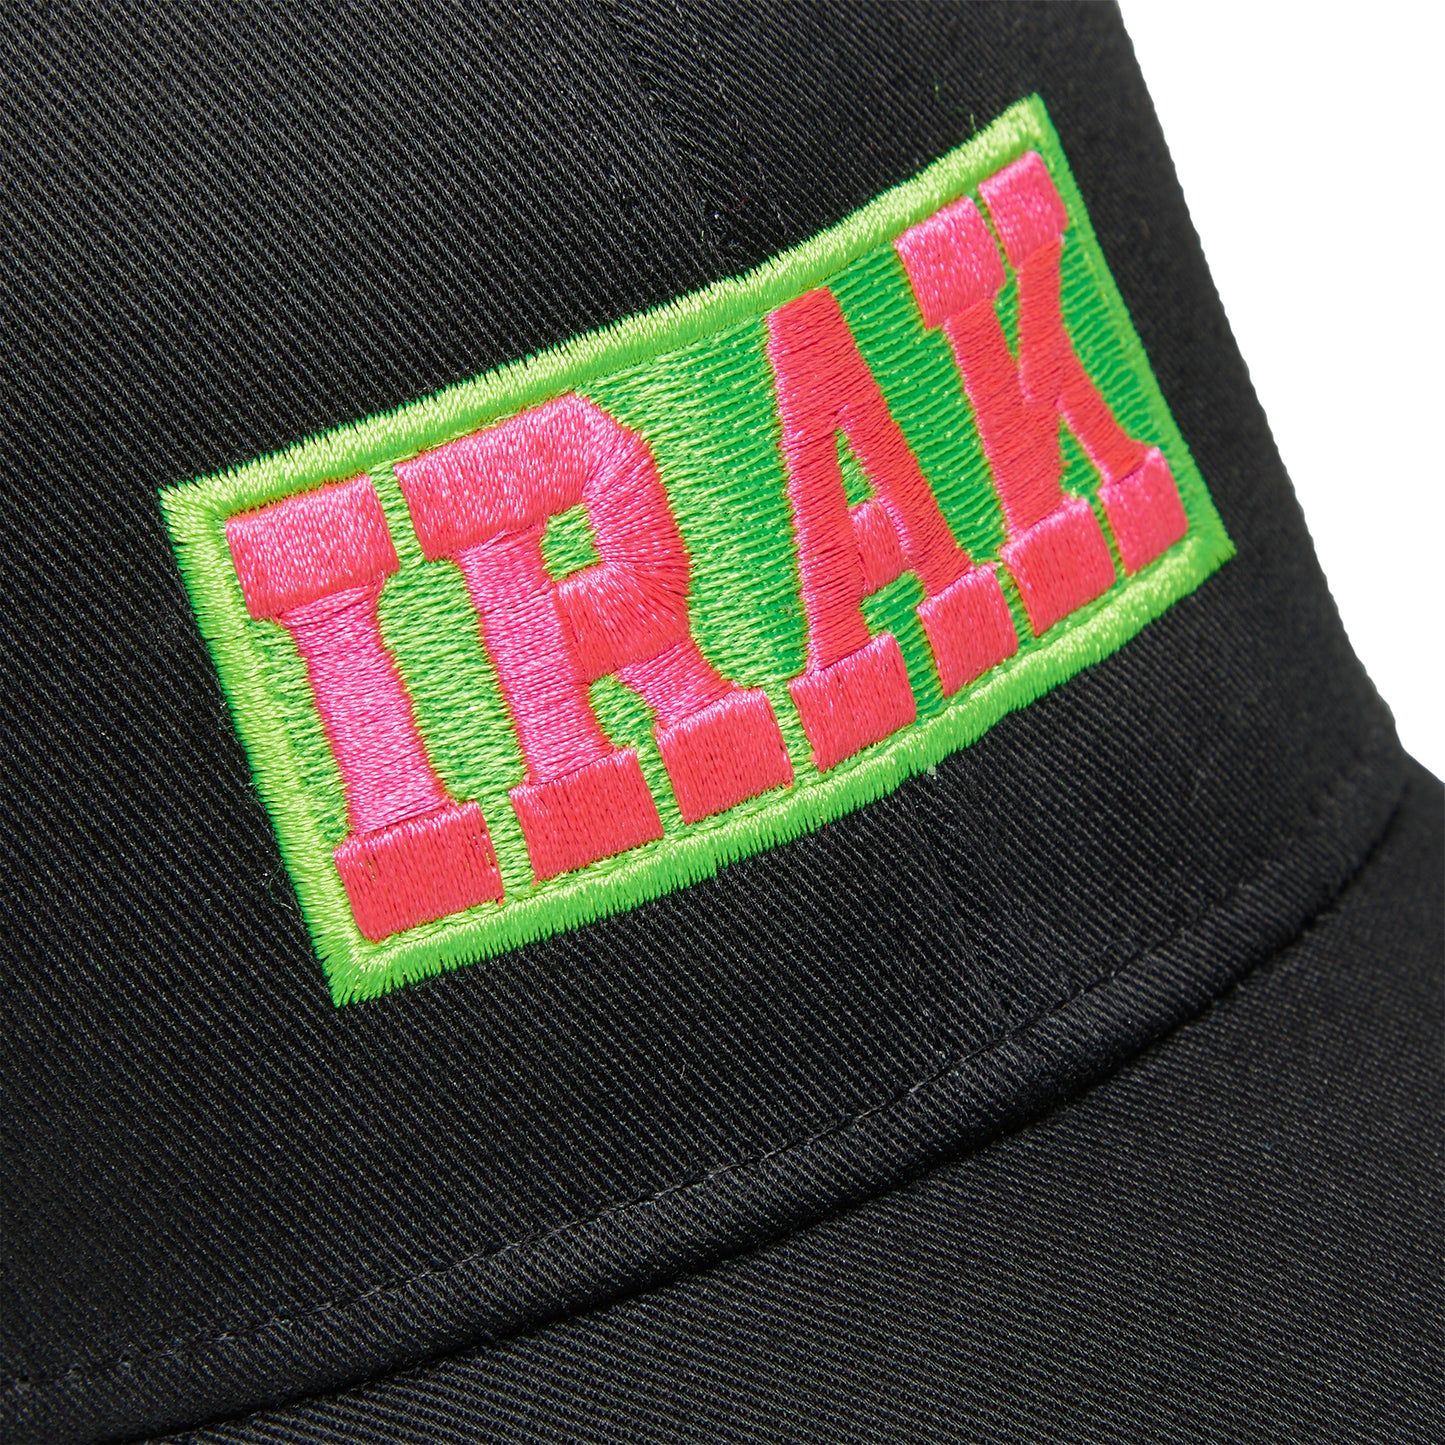 IRAK Neon IRAK Trucker Hat (Black)